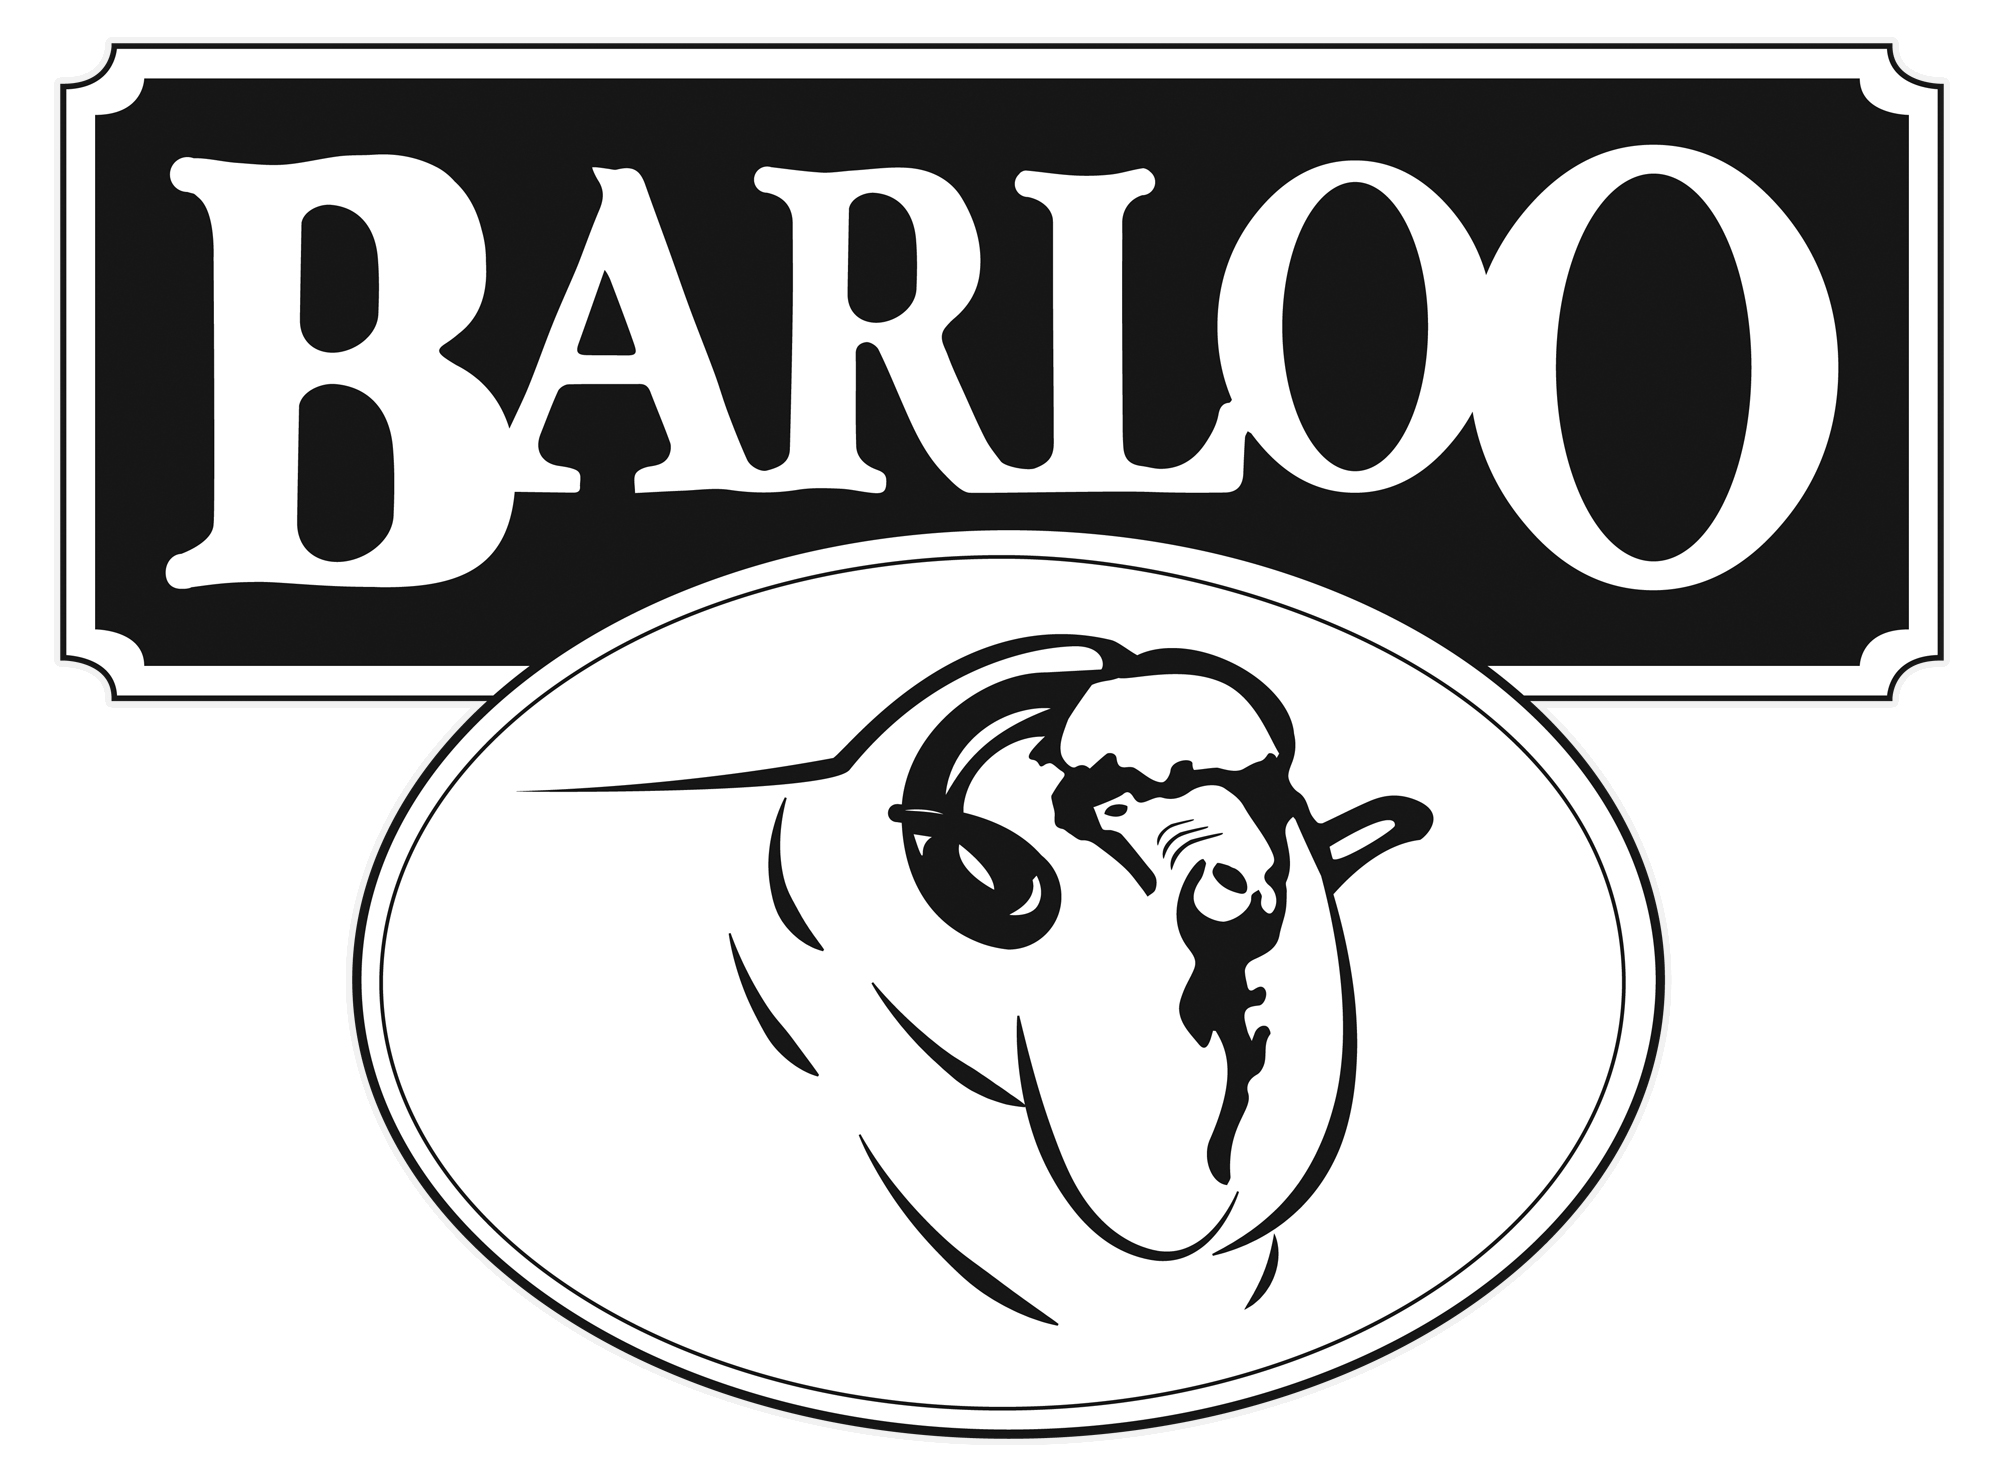 Barloo/Willemenup On-property Merino and Poll Merino Ram Sale